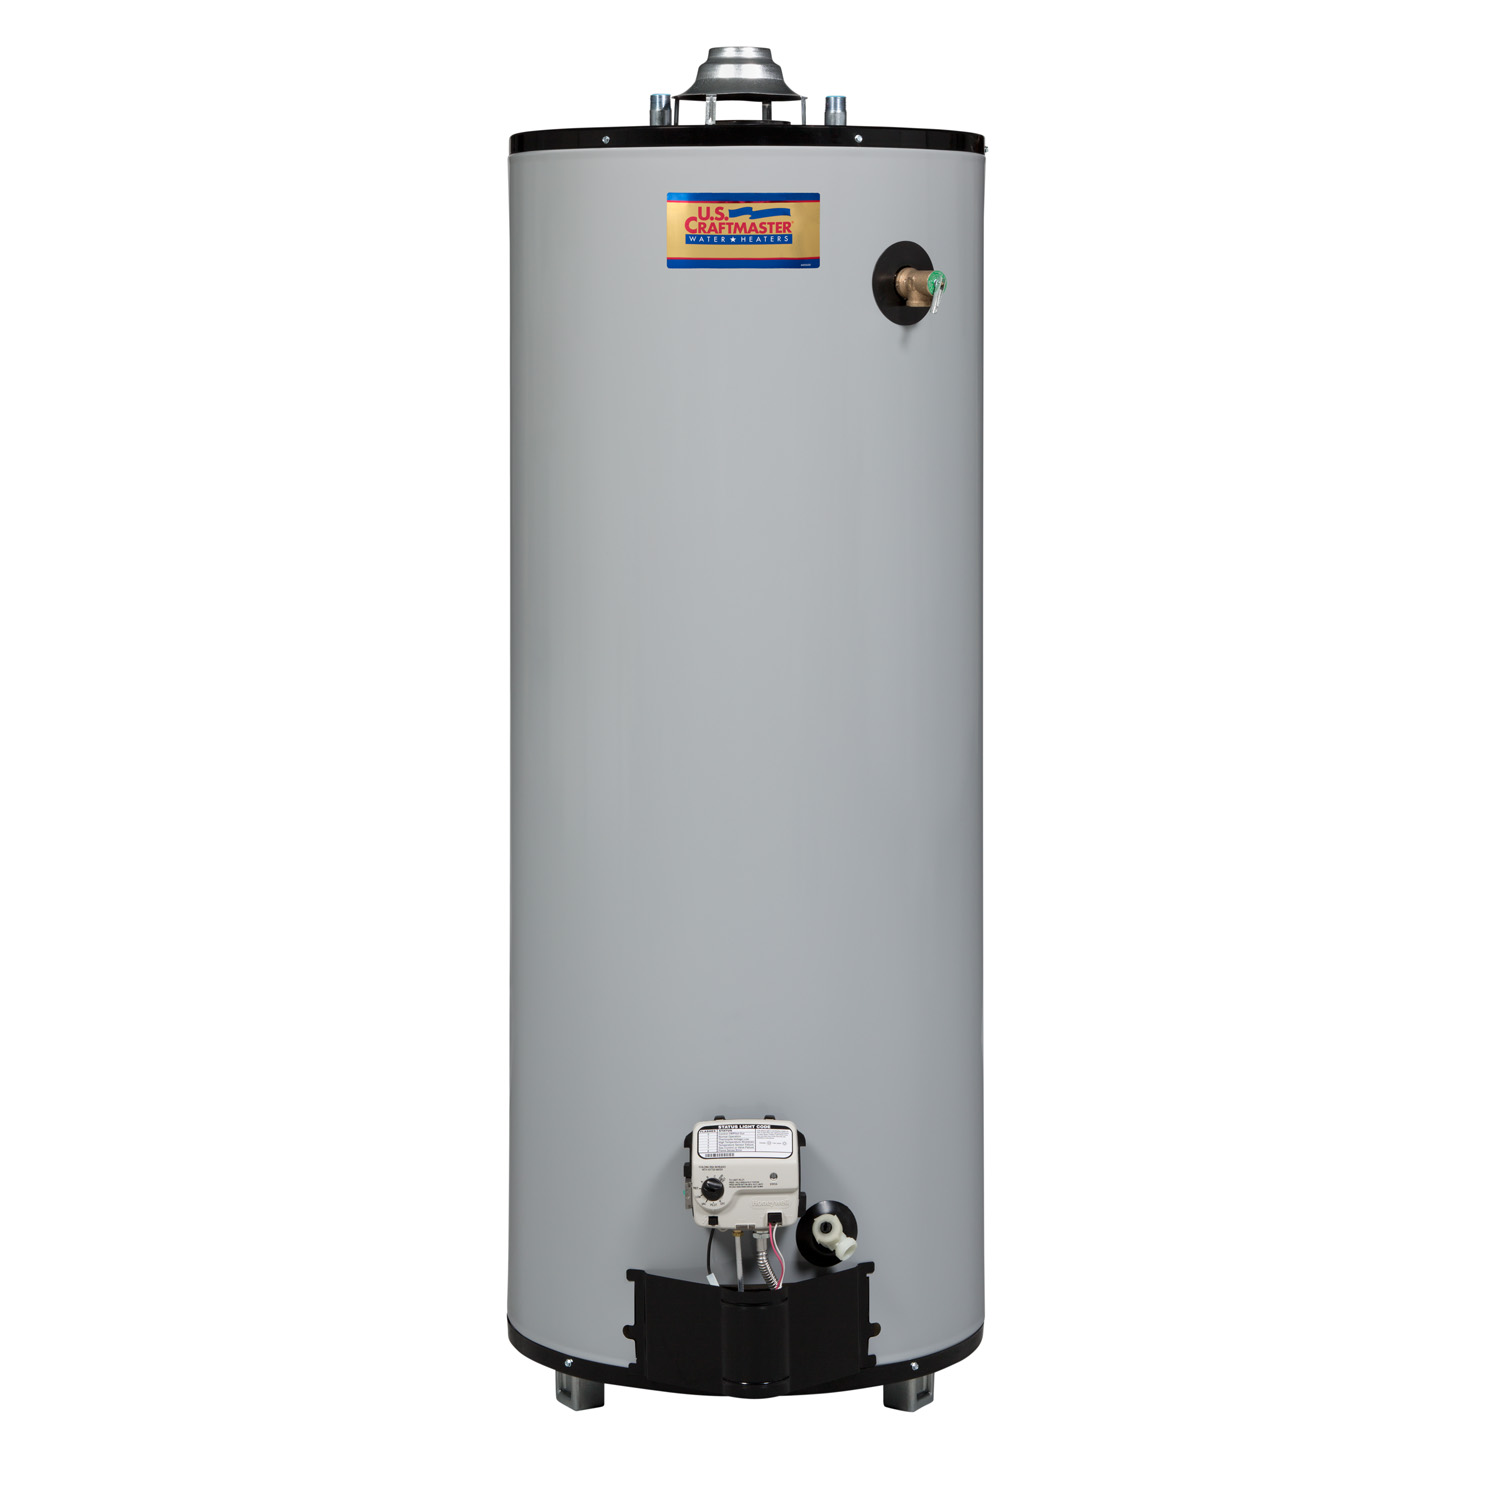 Газовый водонагреватель Аристон 200. Label Ariston Gas Water Heater. Газовый водонагреватель накопительного типа. Водонагреватель открытого типа.